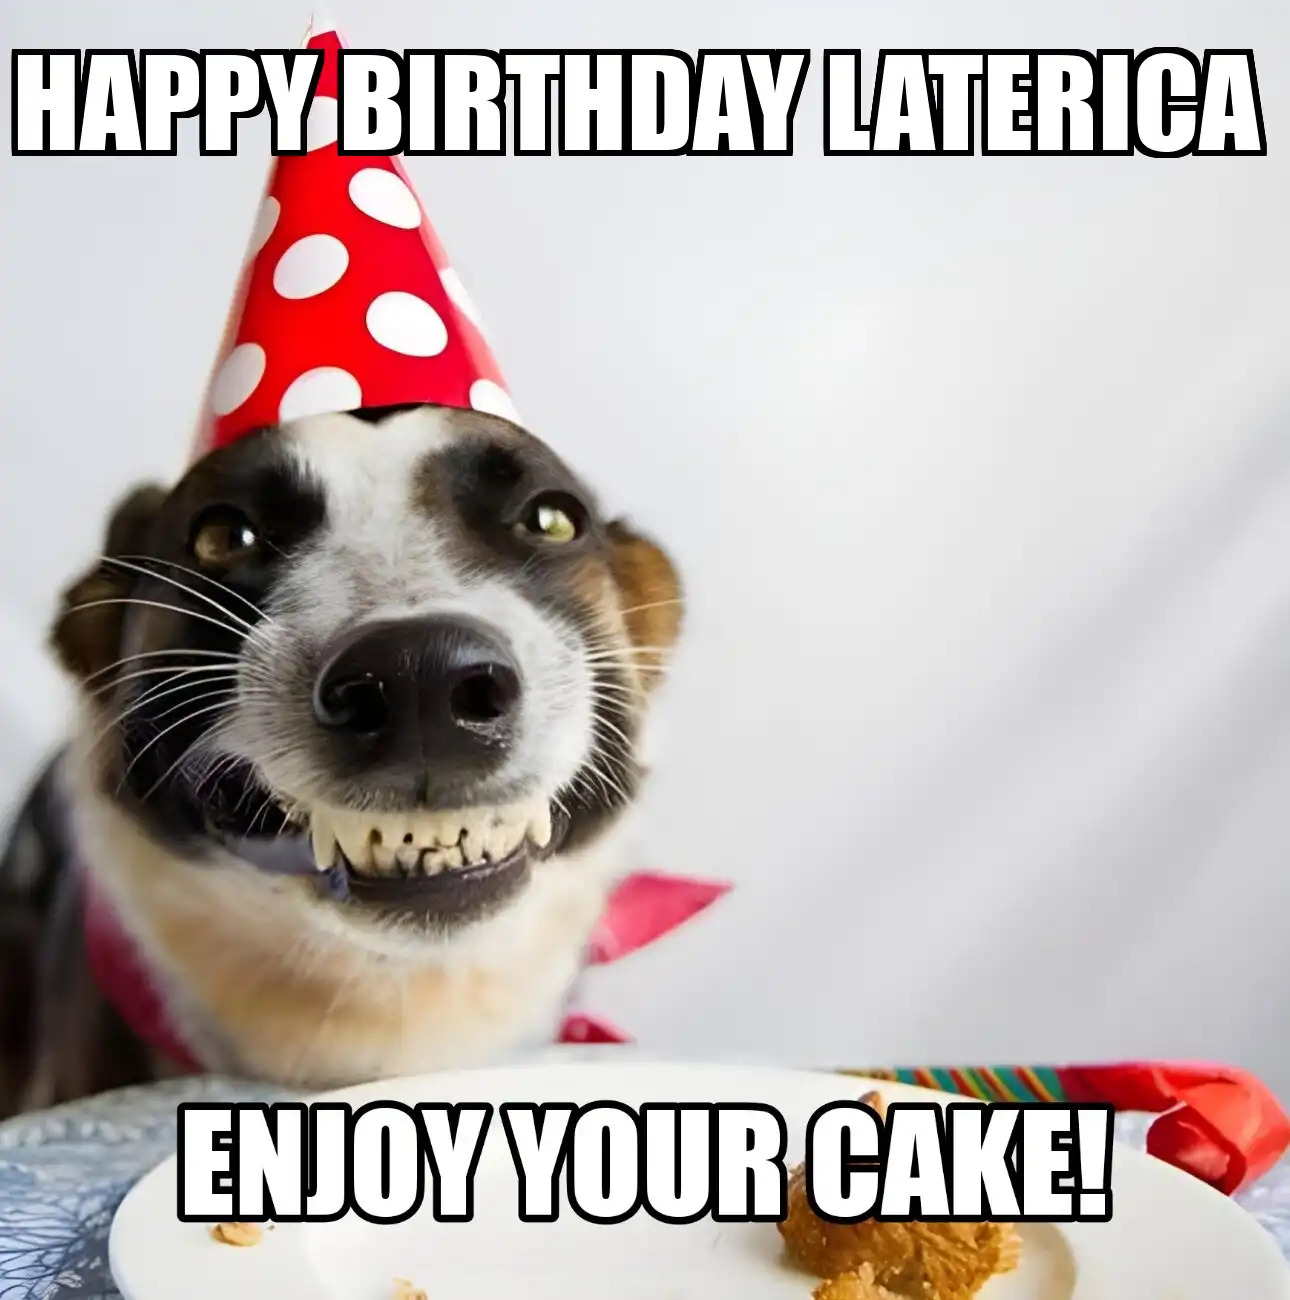 Happy Birthday Laterica Enjoy Your Cake Dog Meme